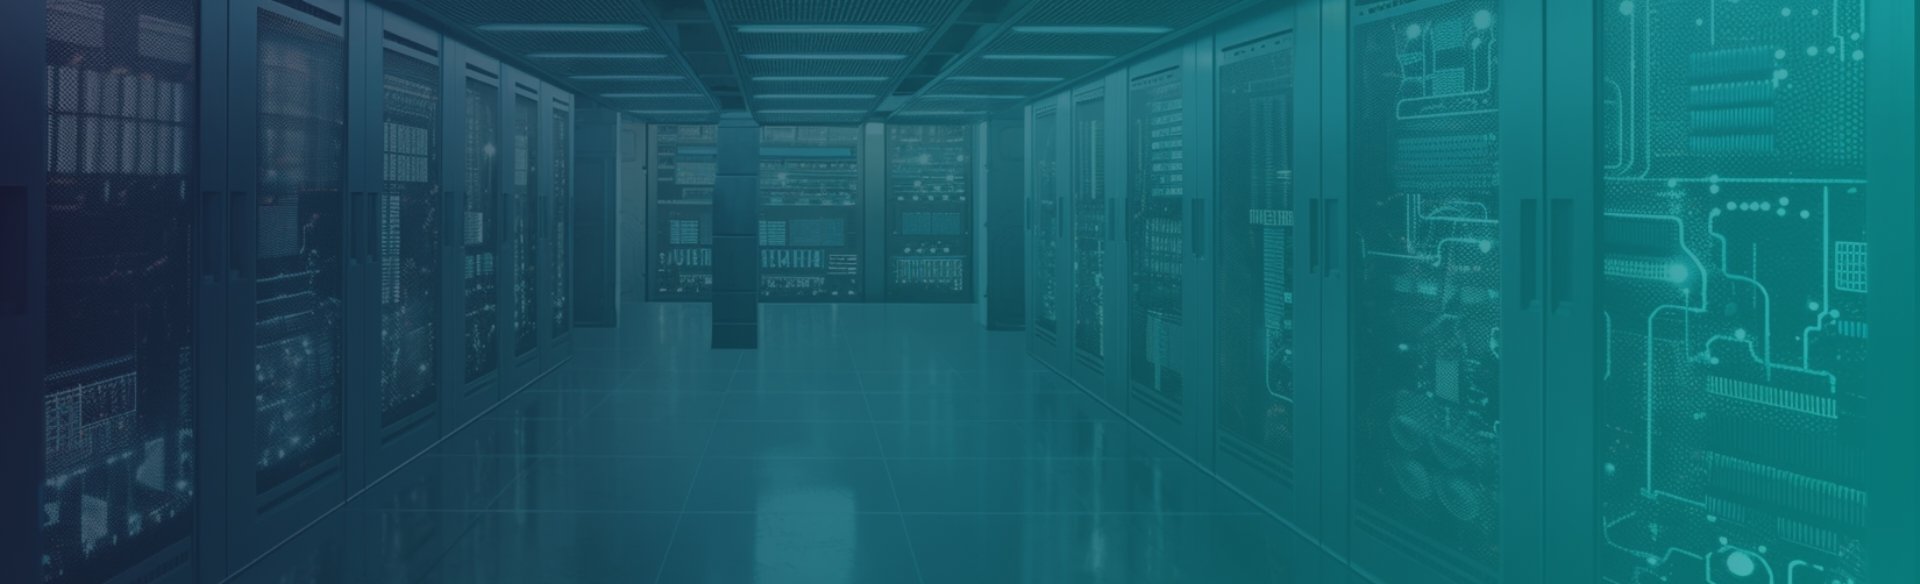 Integration of server racks in a modern data center with a digital overlay